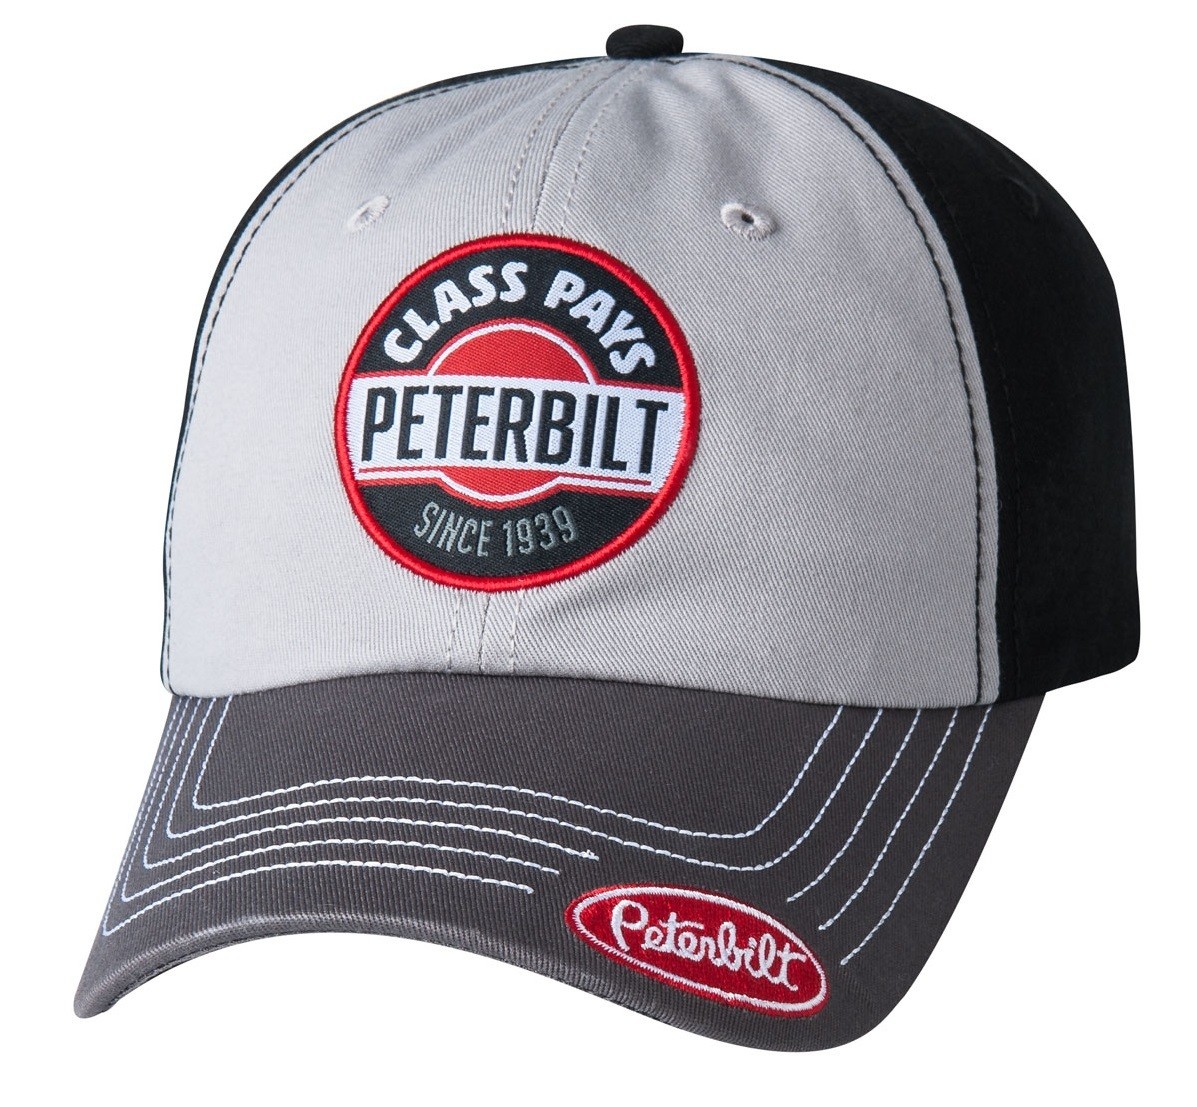 Peterbilt Unstructured twill Khaki Cap NEW Adjustable Hat 